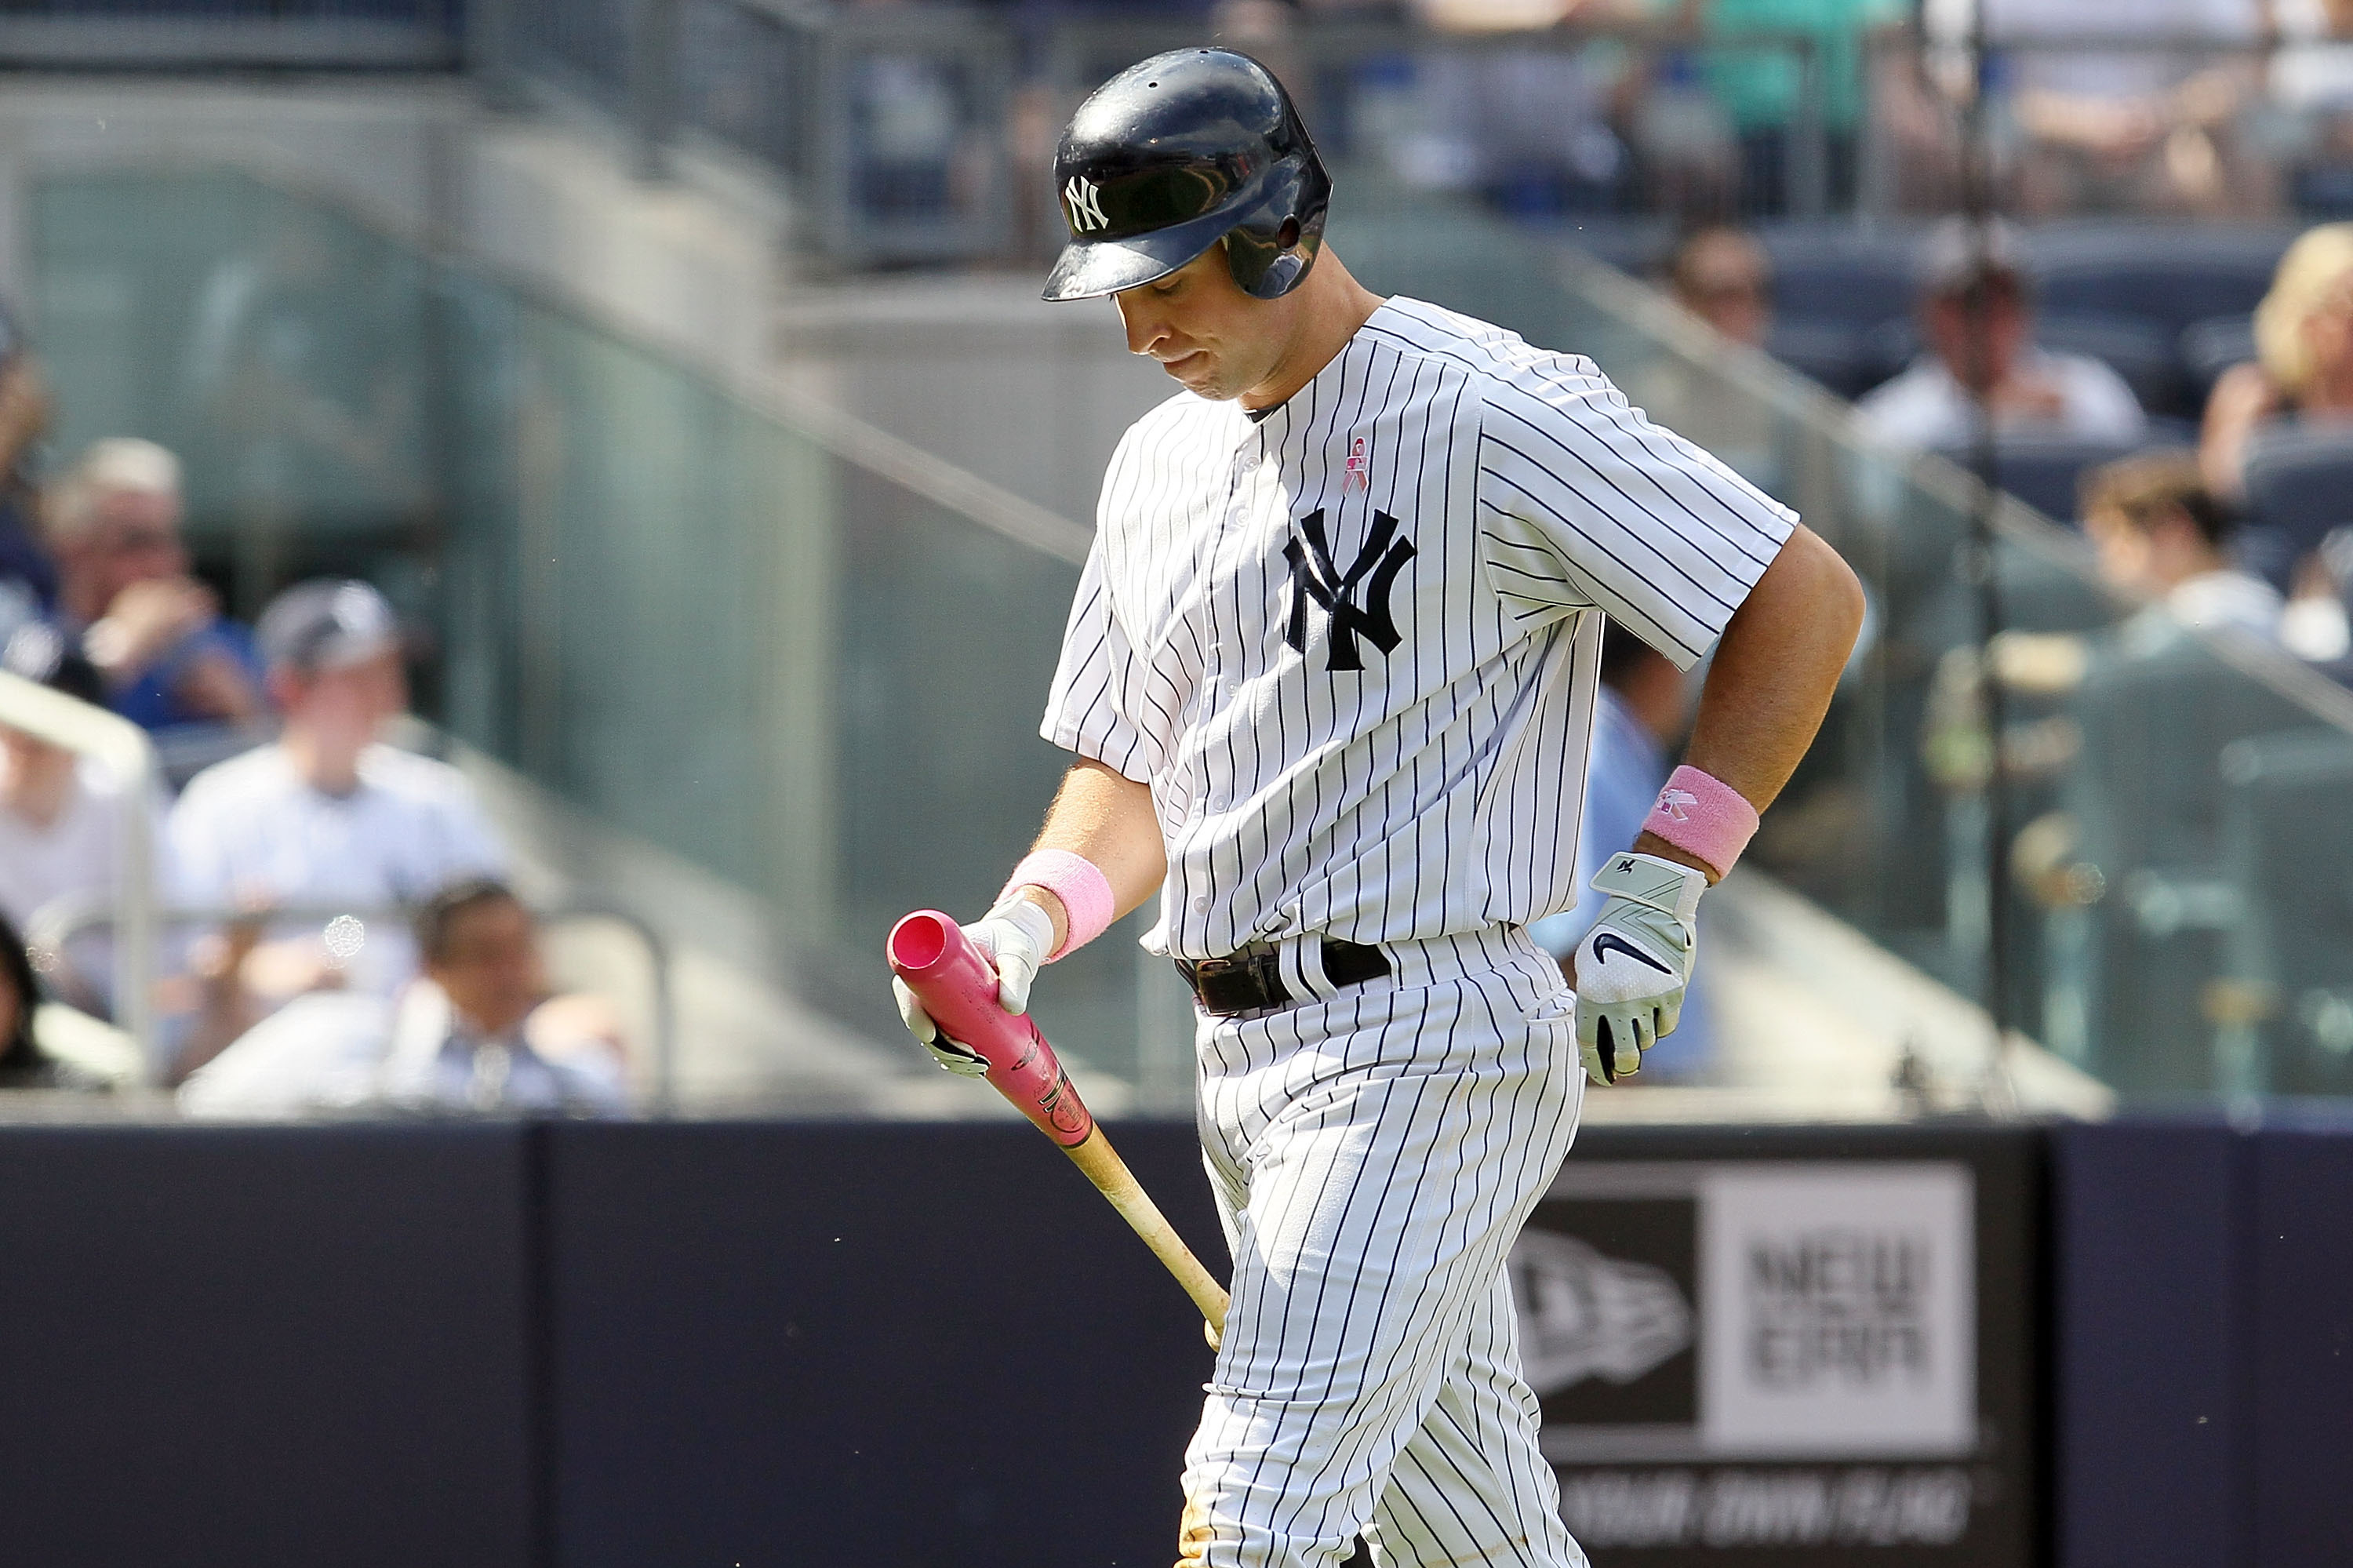 Yankees' Mark Teixeira has wrist surgery, out for season